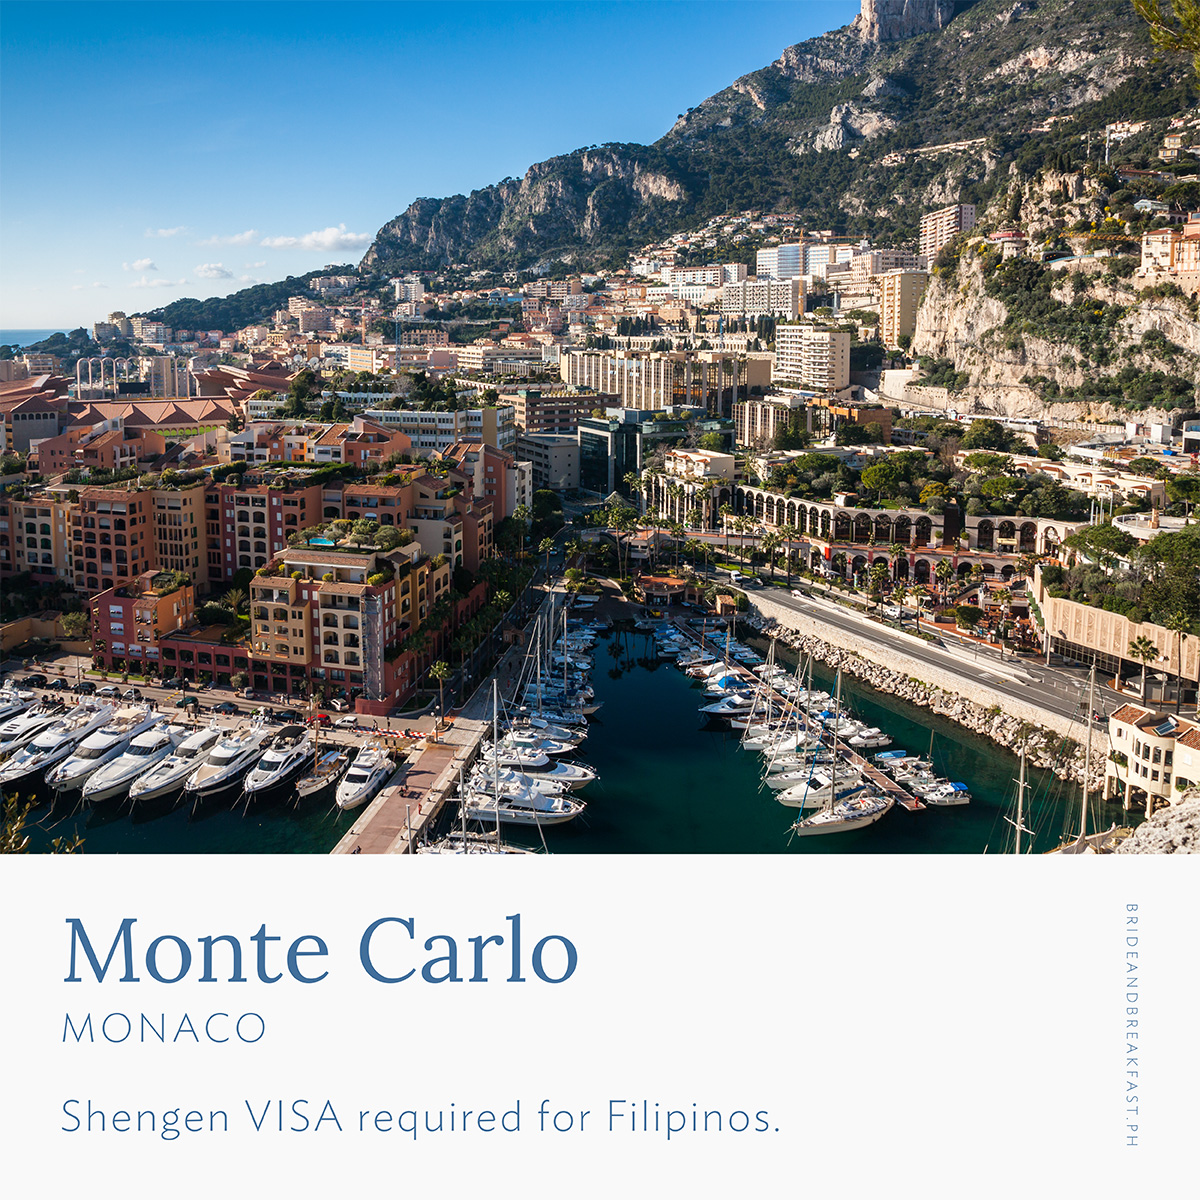 MONTE CARLO, MONACO Visa Requirement: Shengen Visa required for Filipinos.